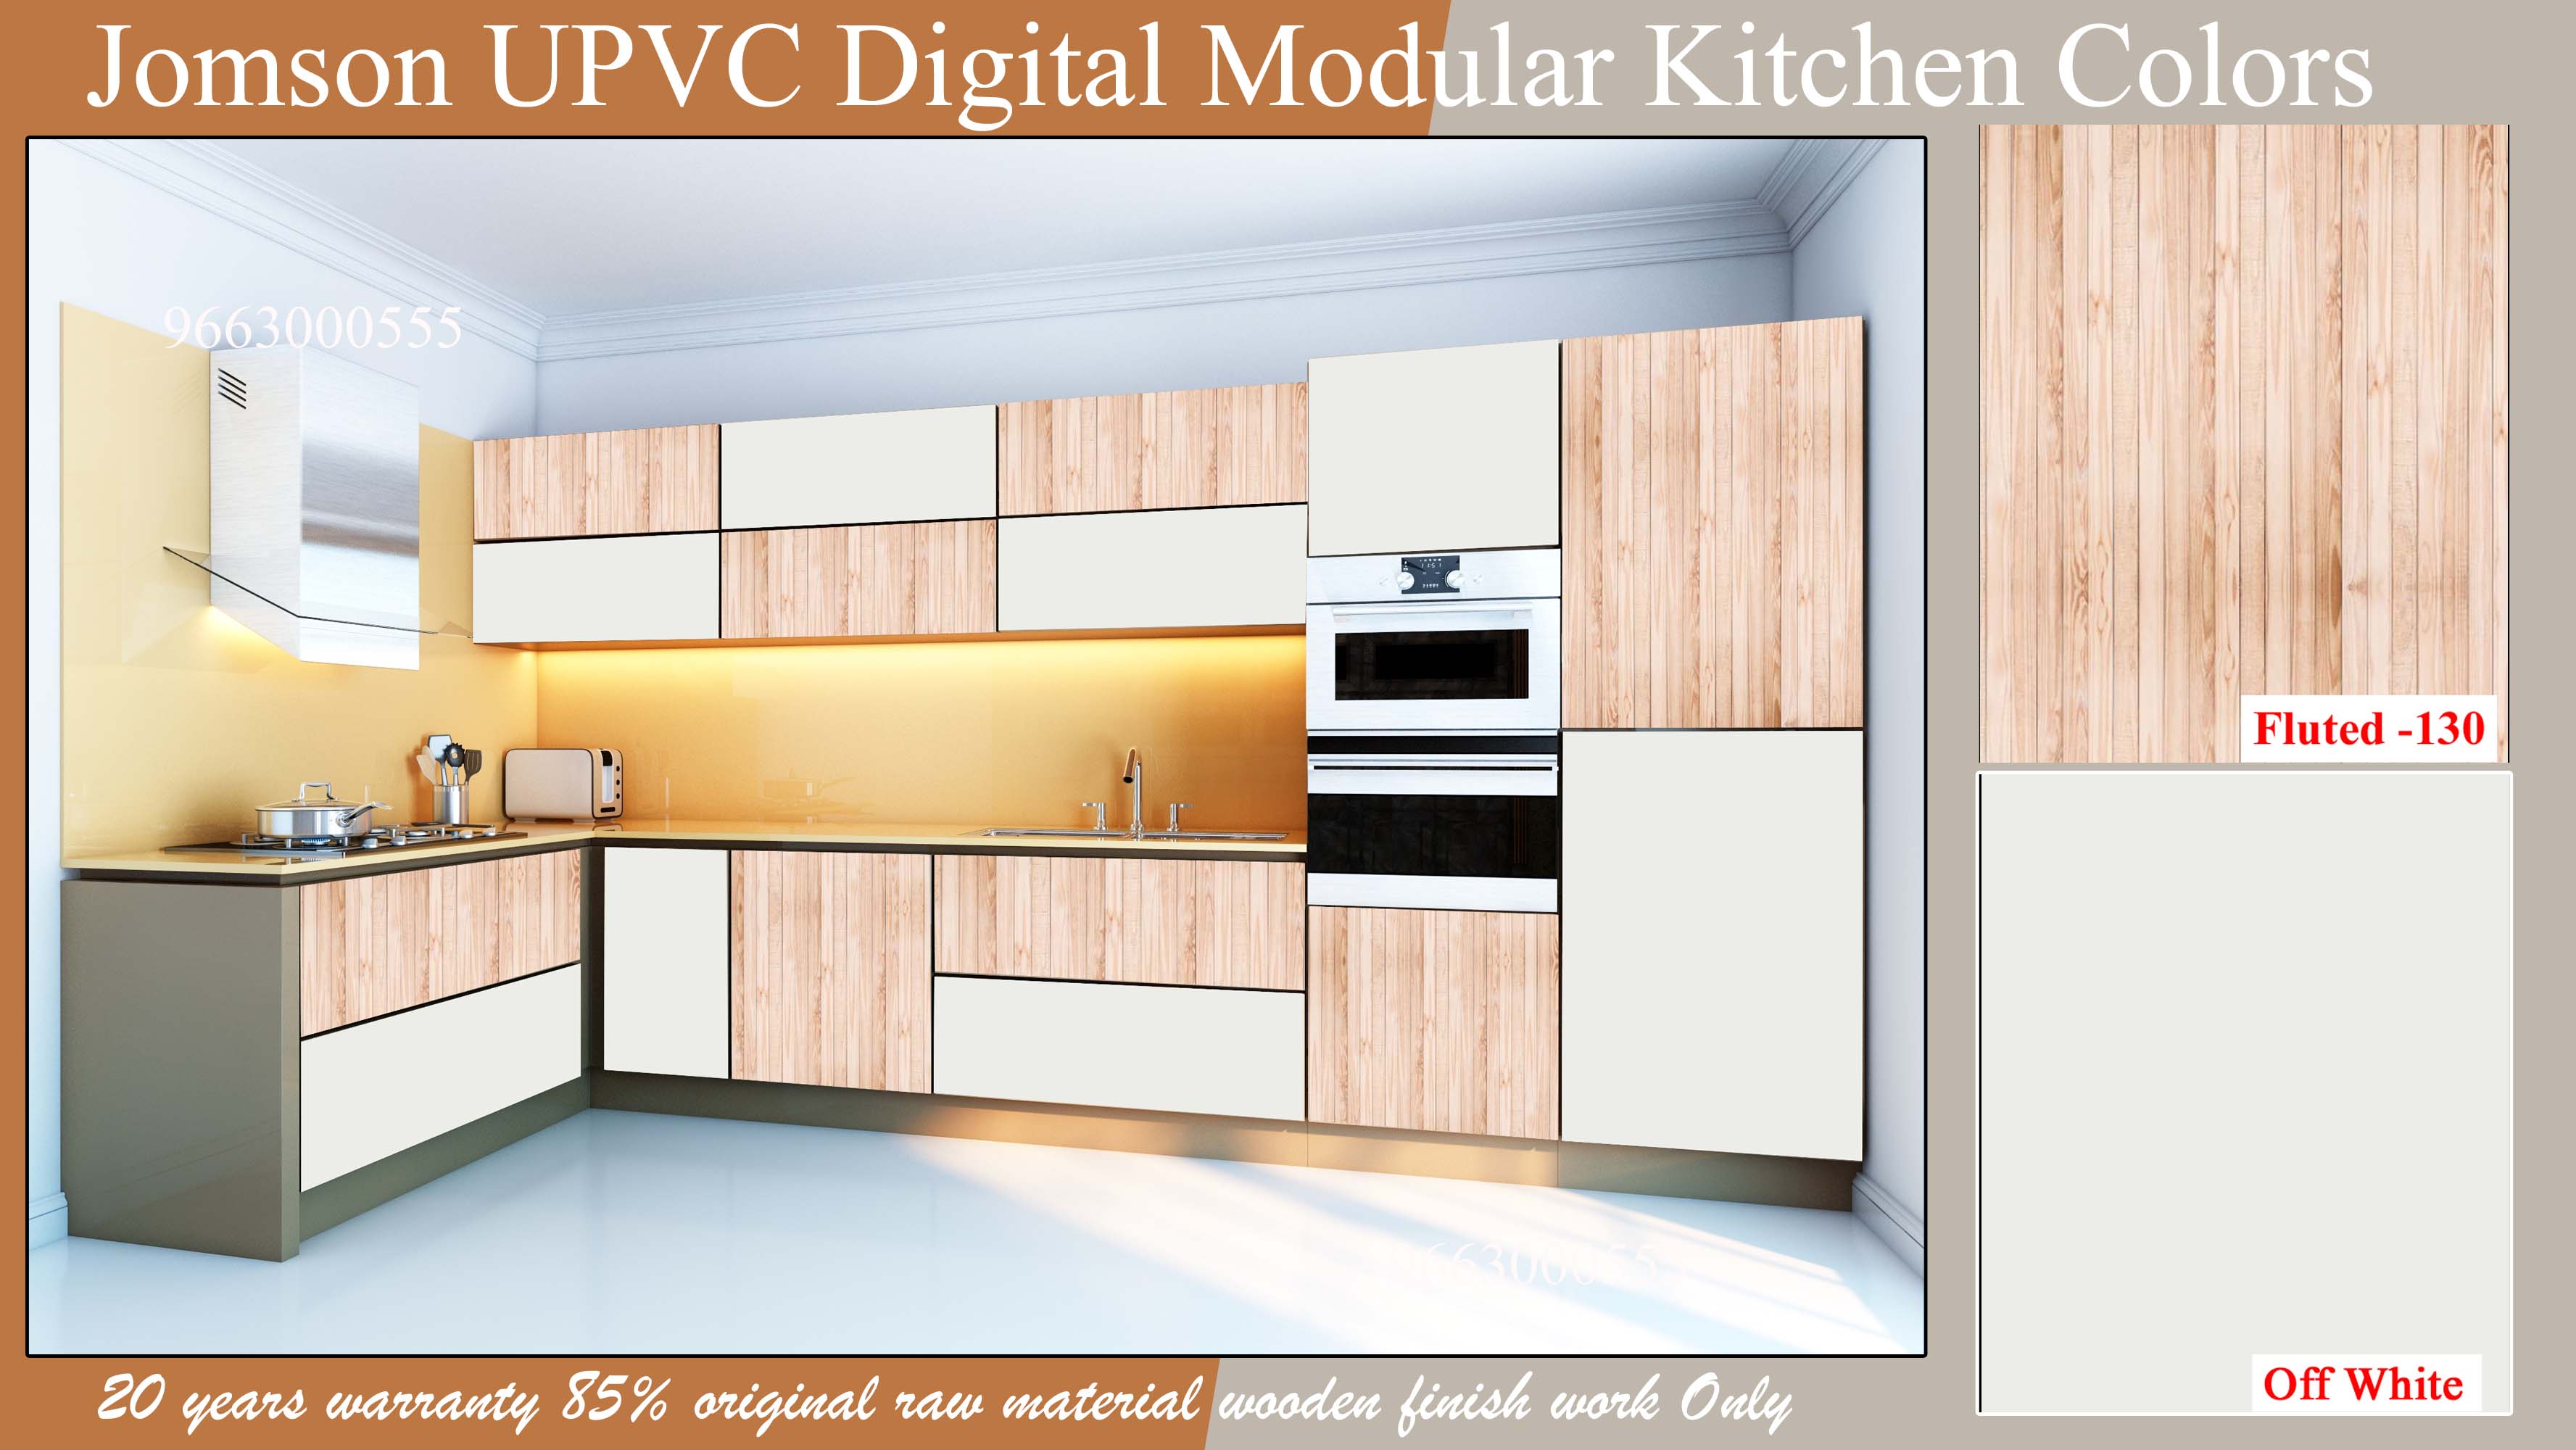 Modular kitchen